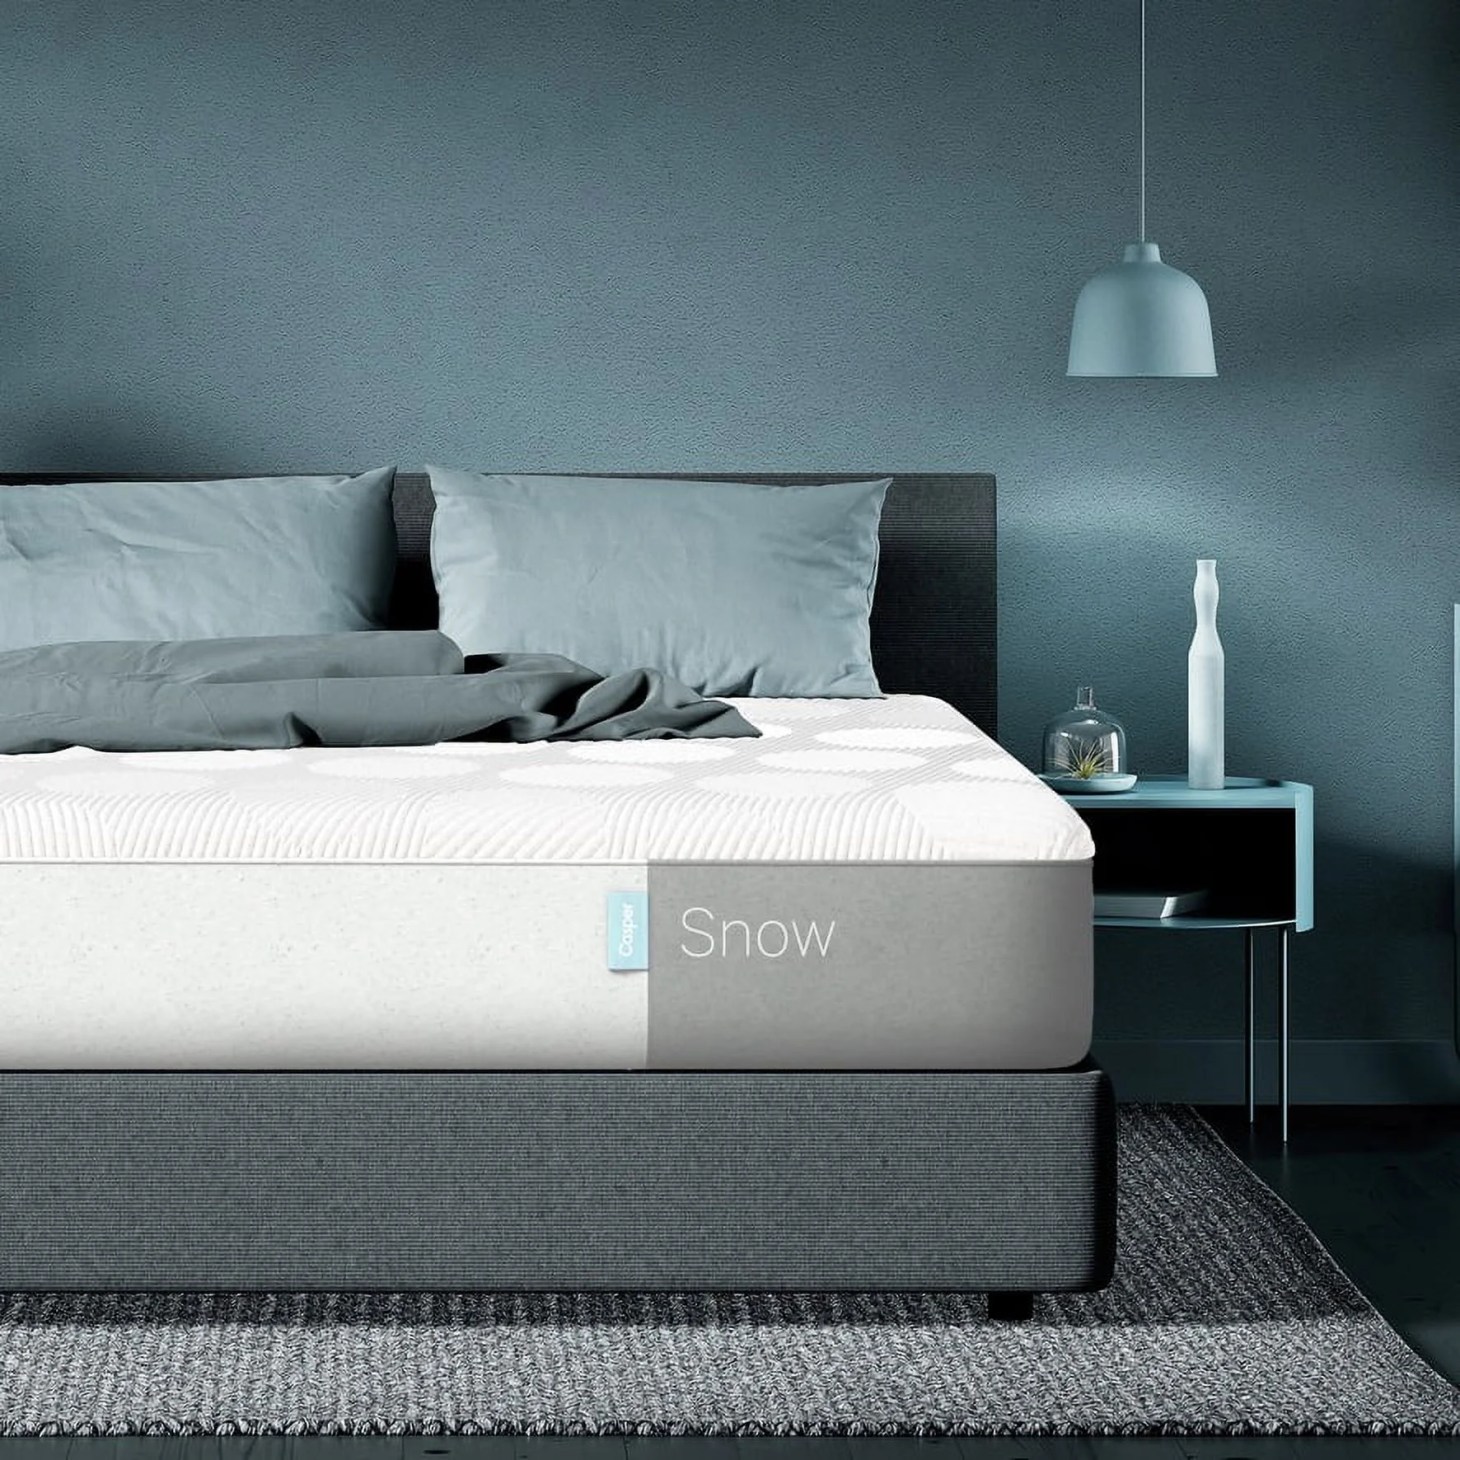 casper snow hybrid mattress at walmart